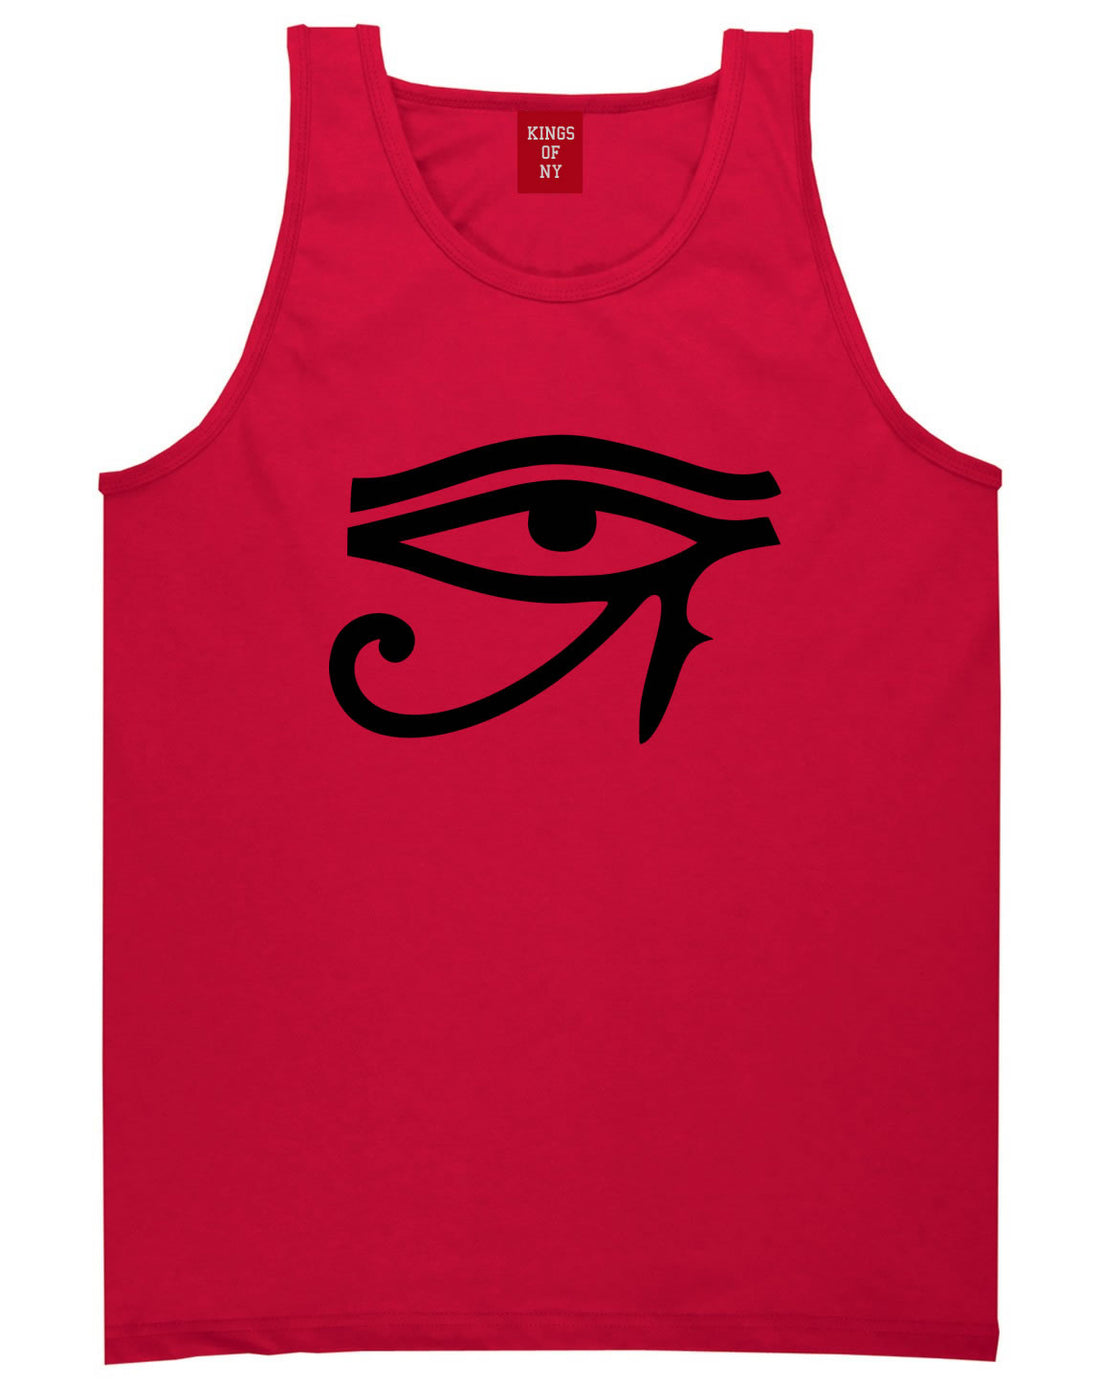 Eye of Horus Egyptian Tank Top by Kings Of NY